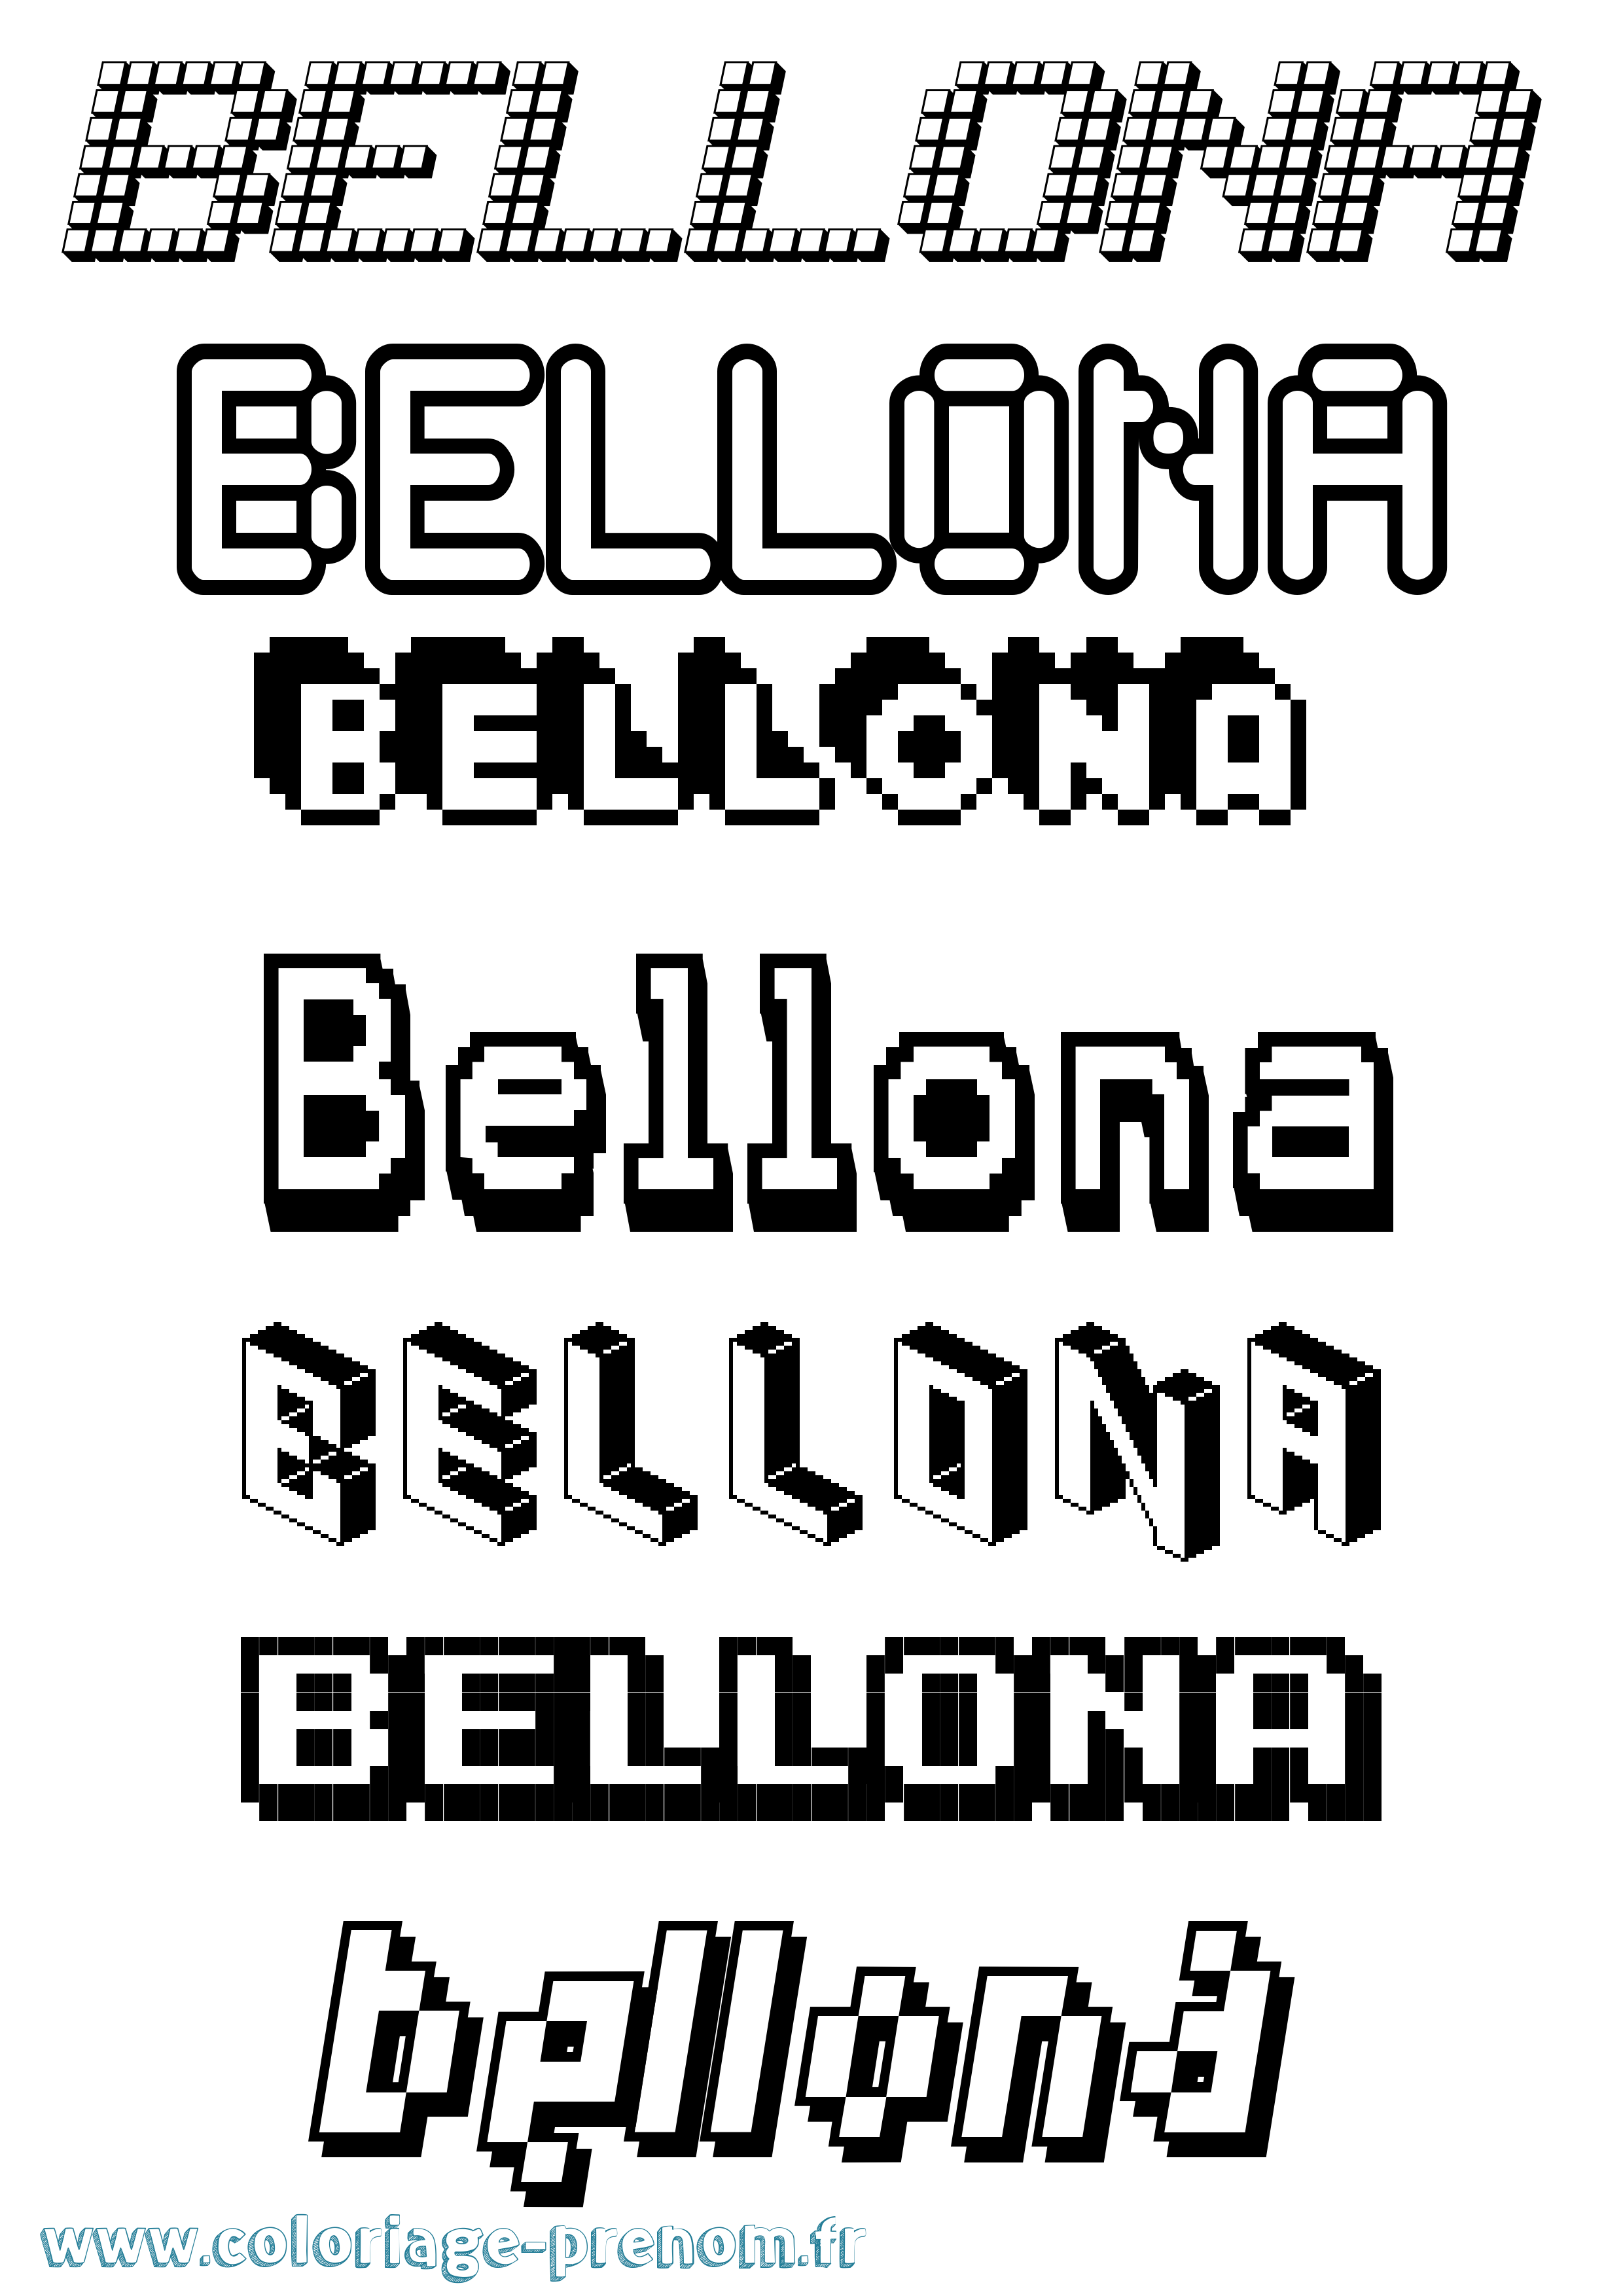 Coloriage prénom Bellona Pixel